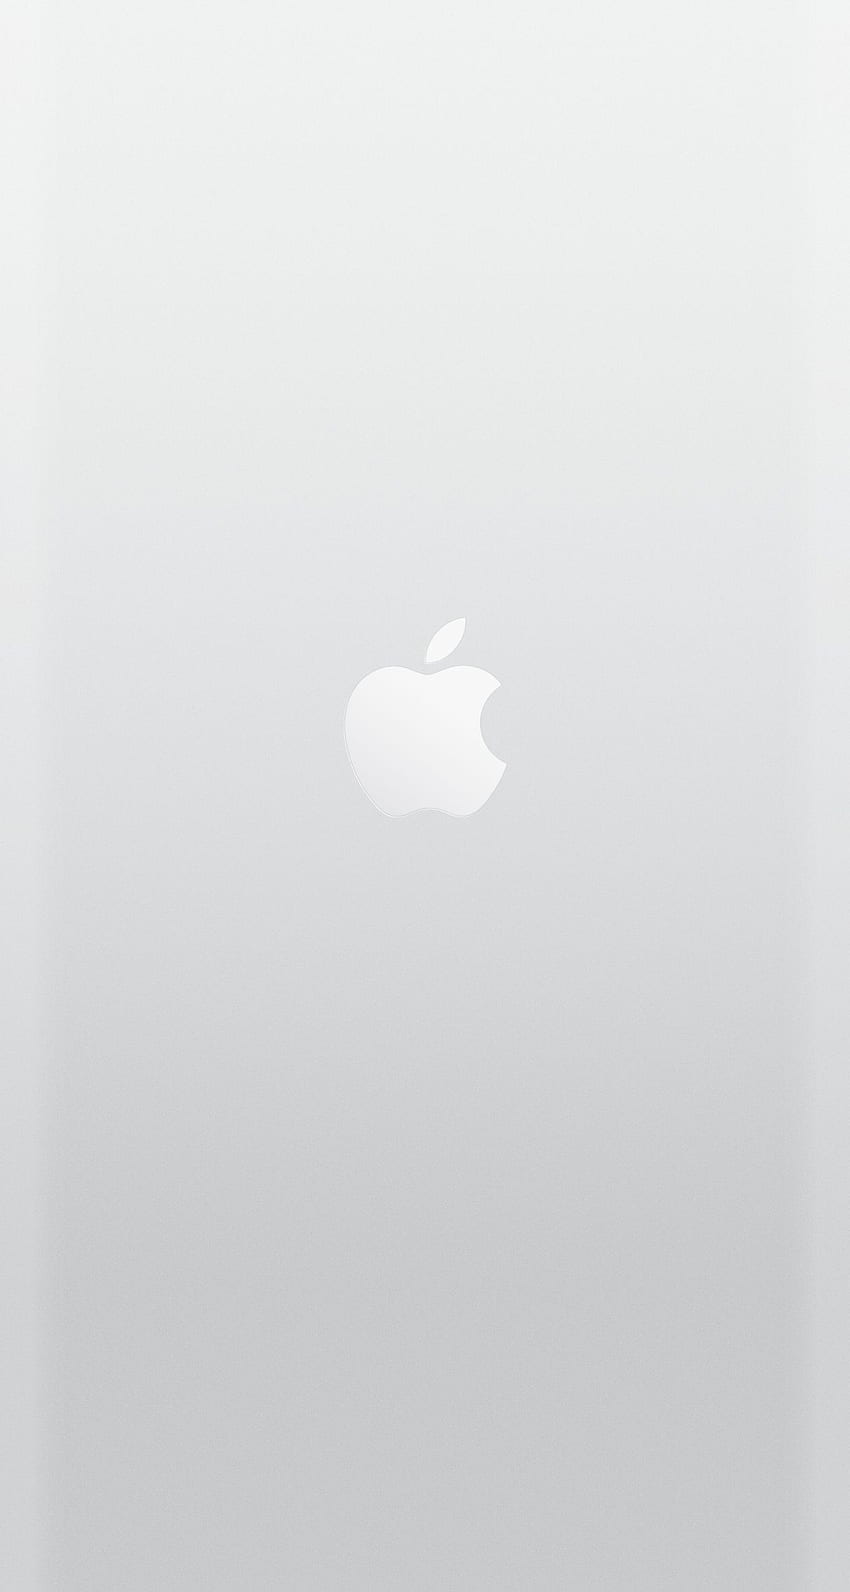 Apple iphone 6 silver HD phone wallpaper